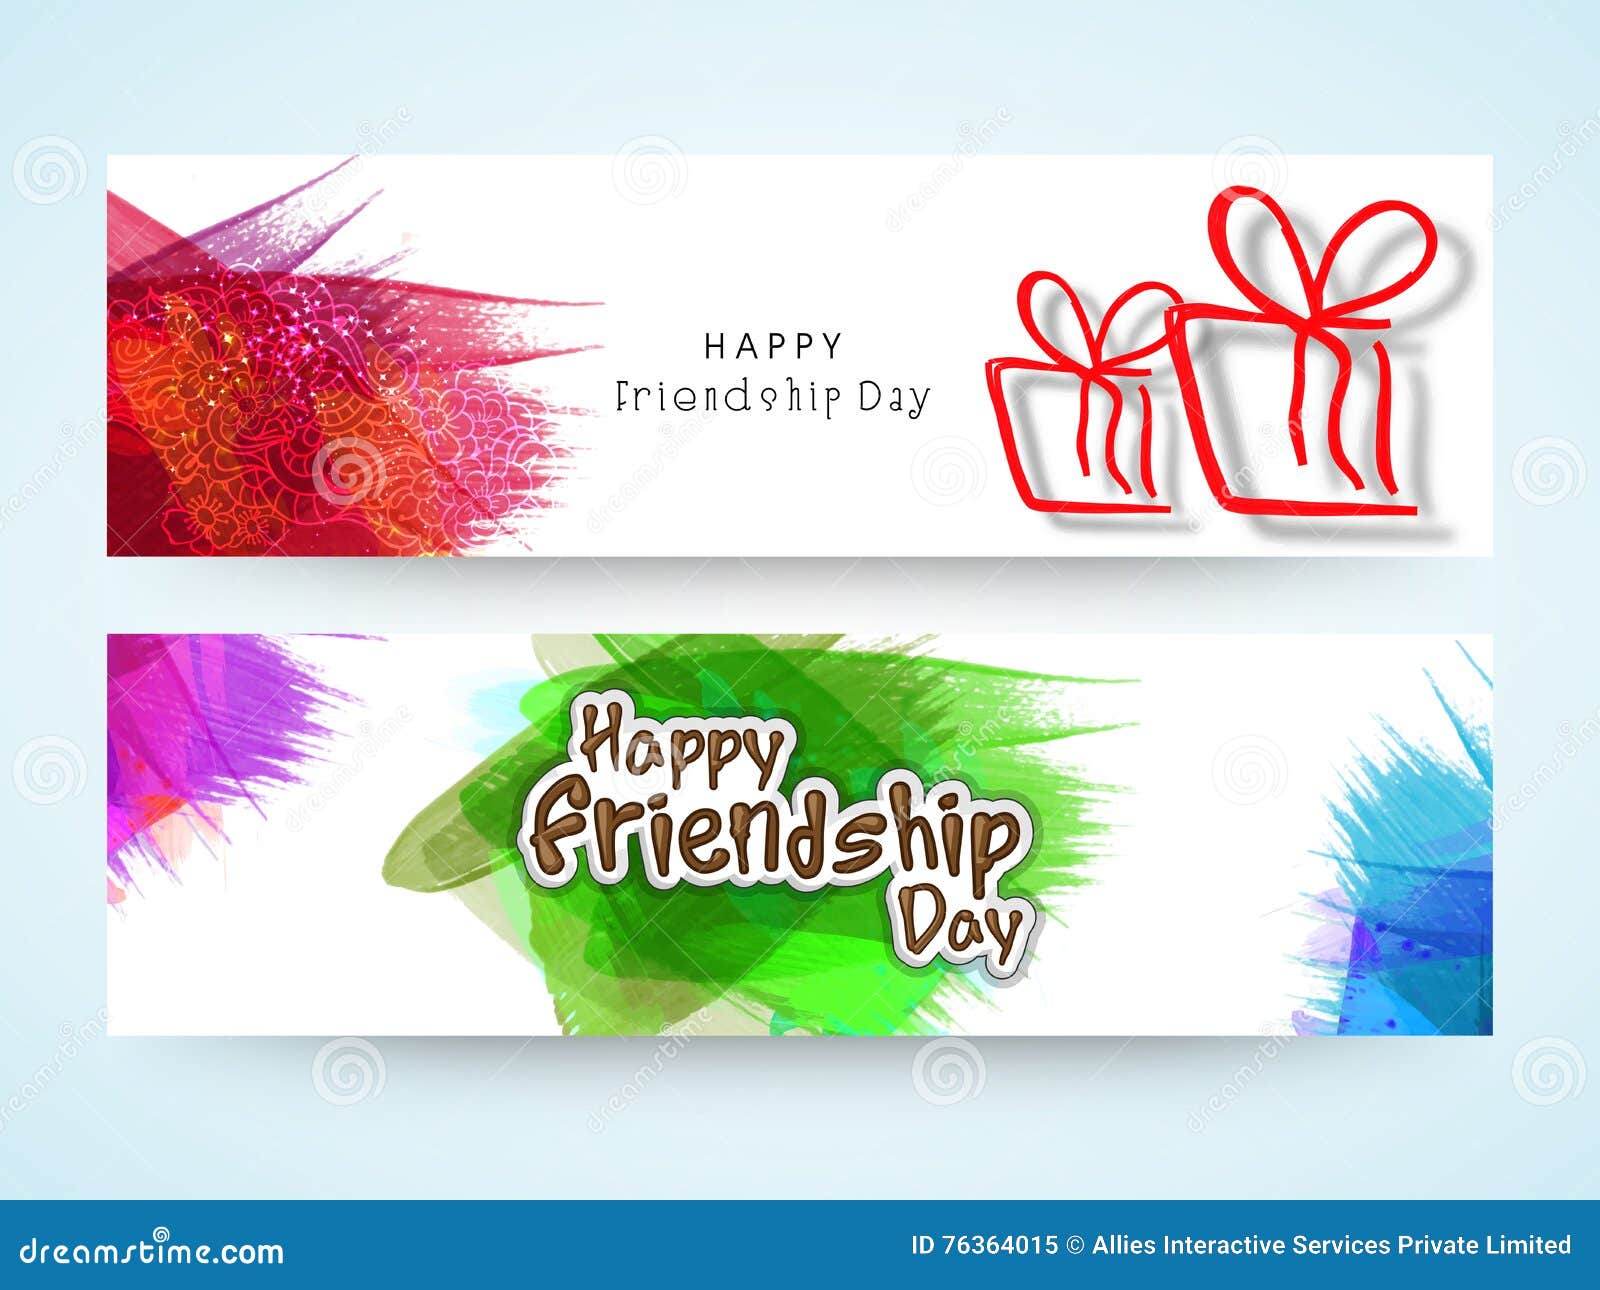 Friendship Day banner designs to customize online